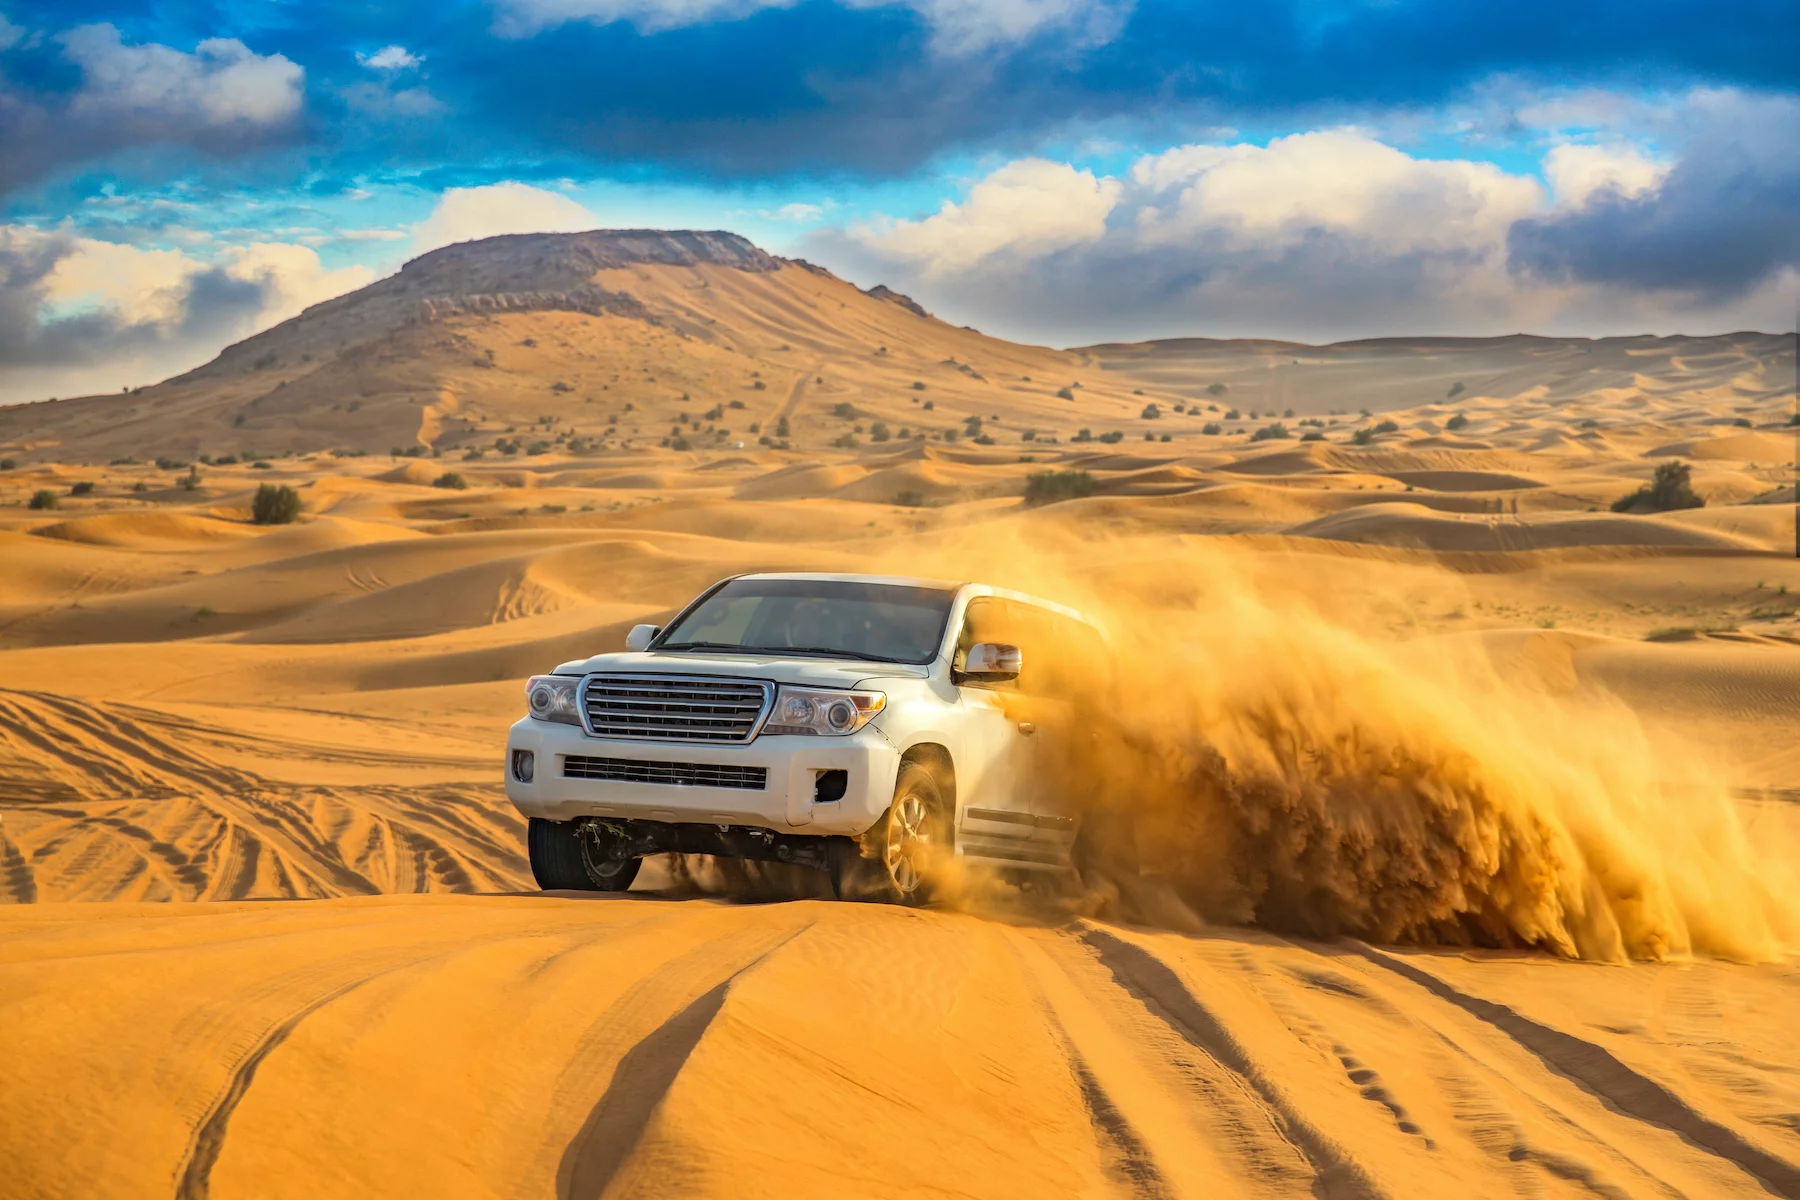 A car dune bashing in the desert